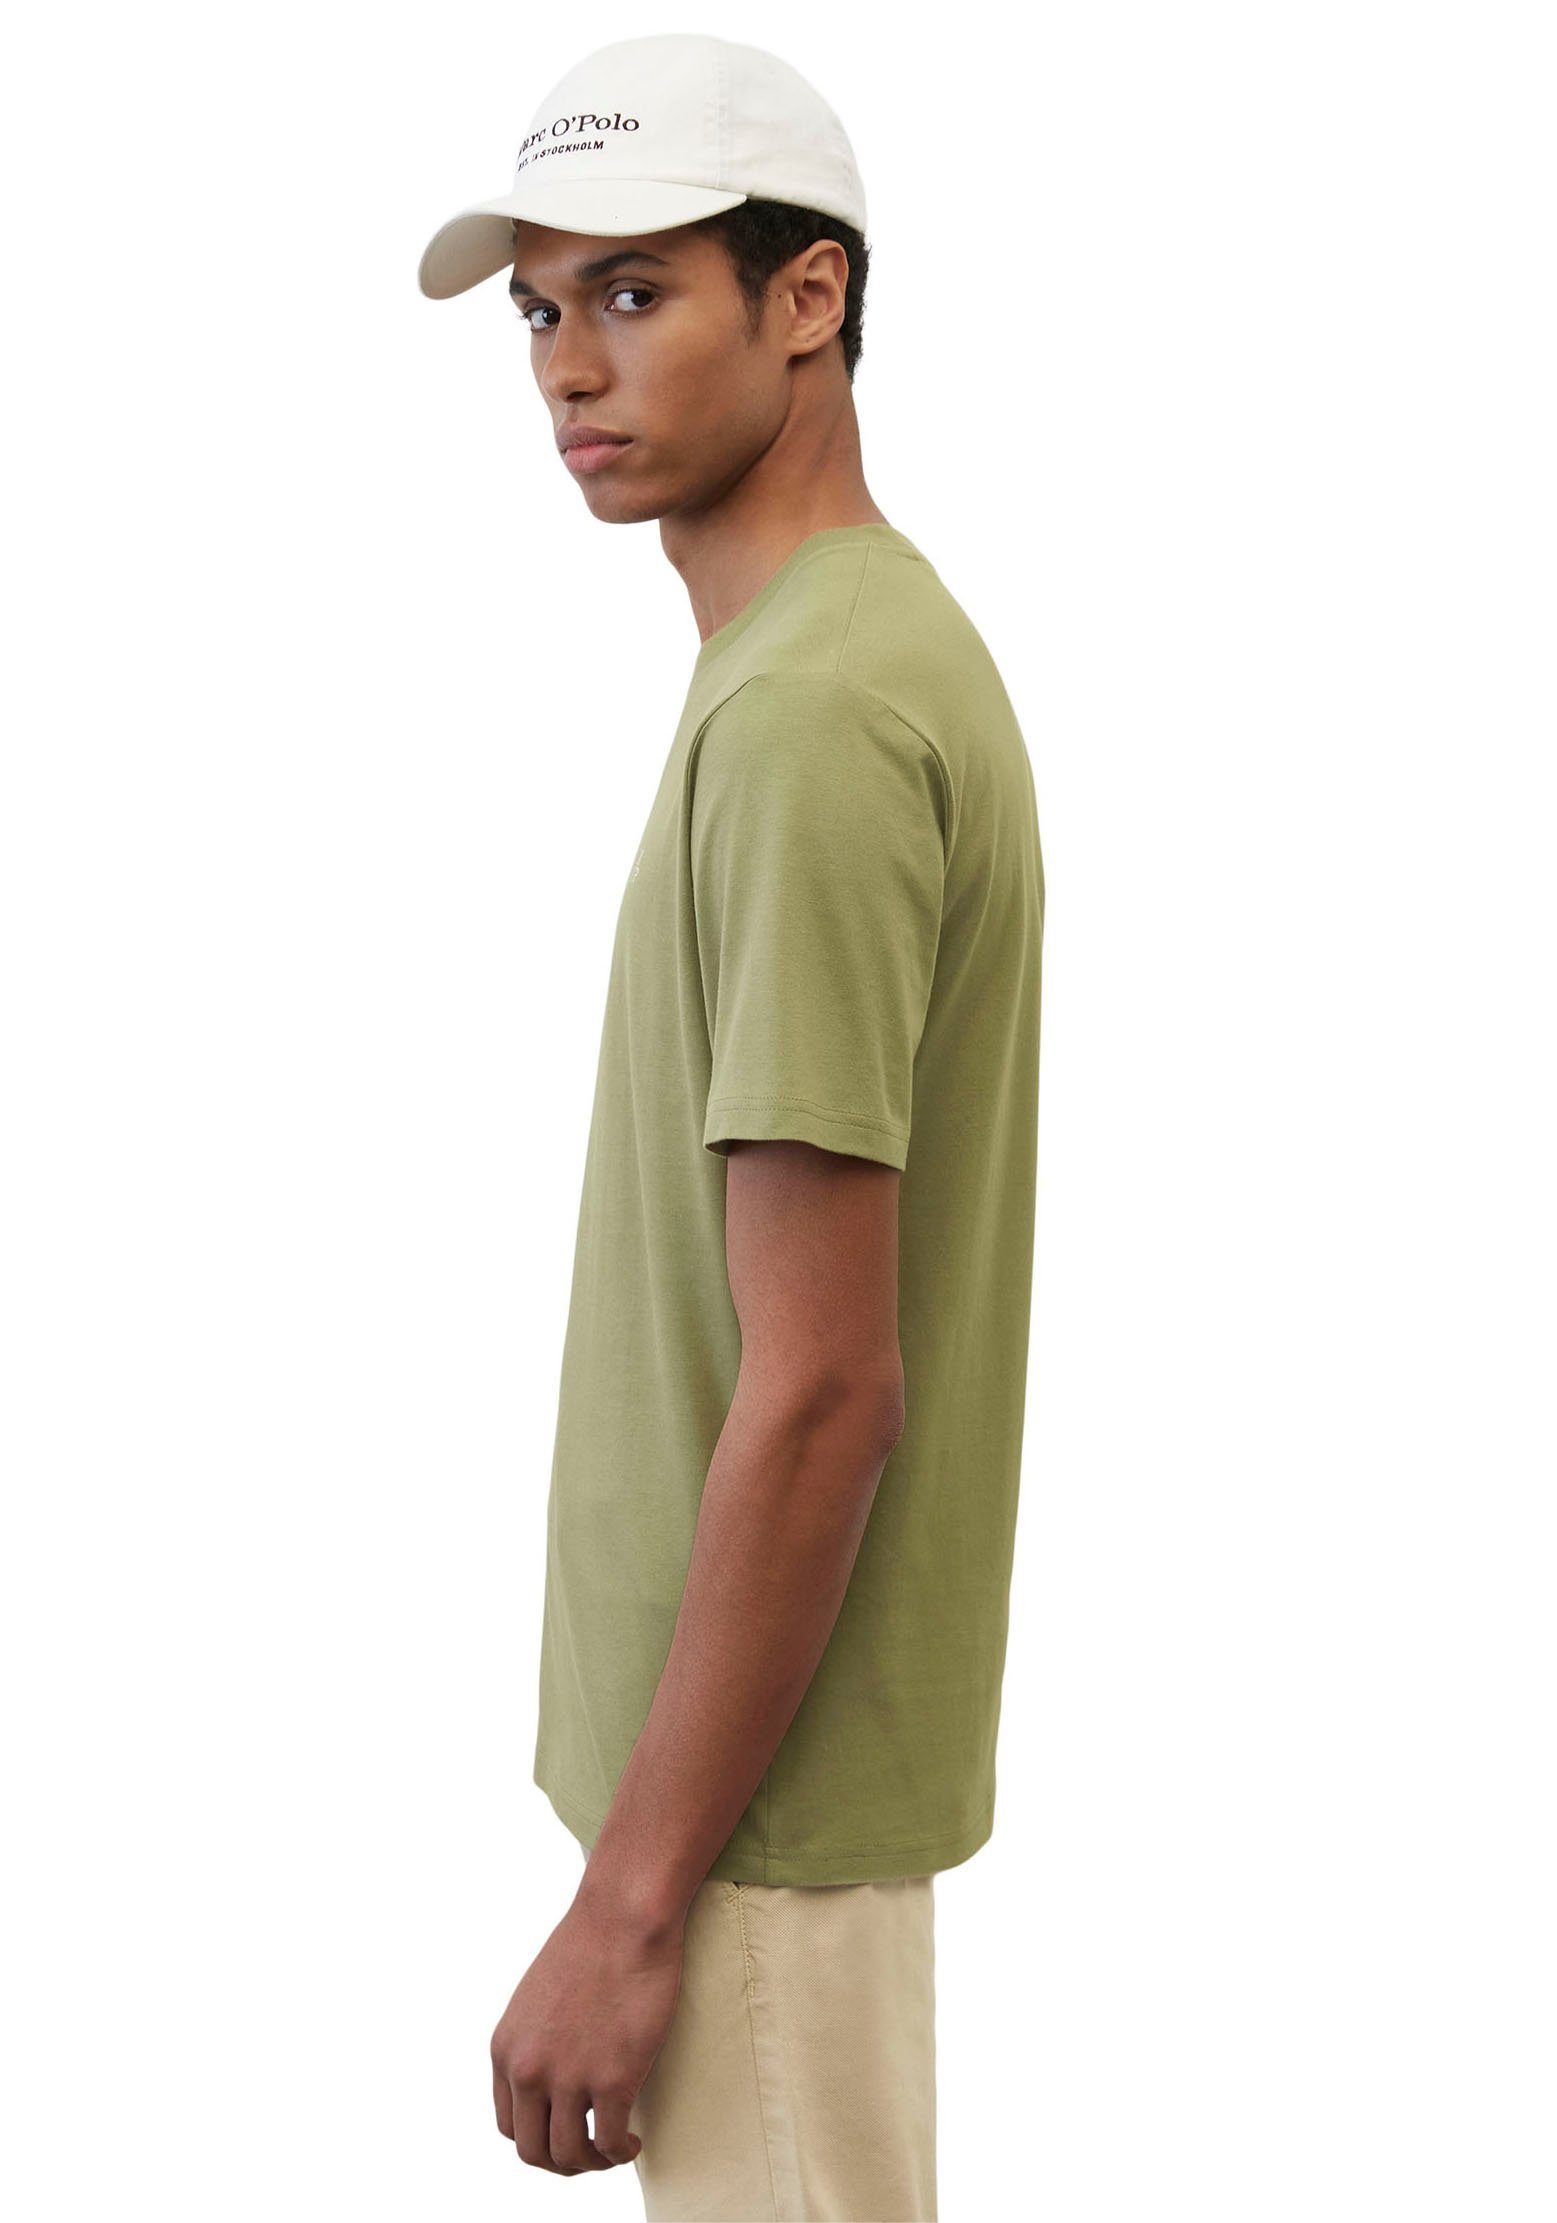 Marc O'Polo T-Shirt T-shirt, print, collar logo ribbed oliv short sleeve